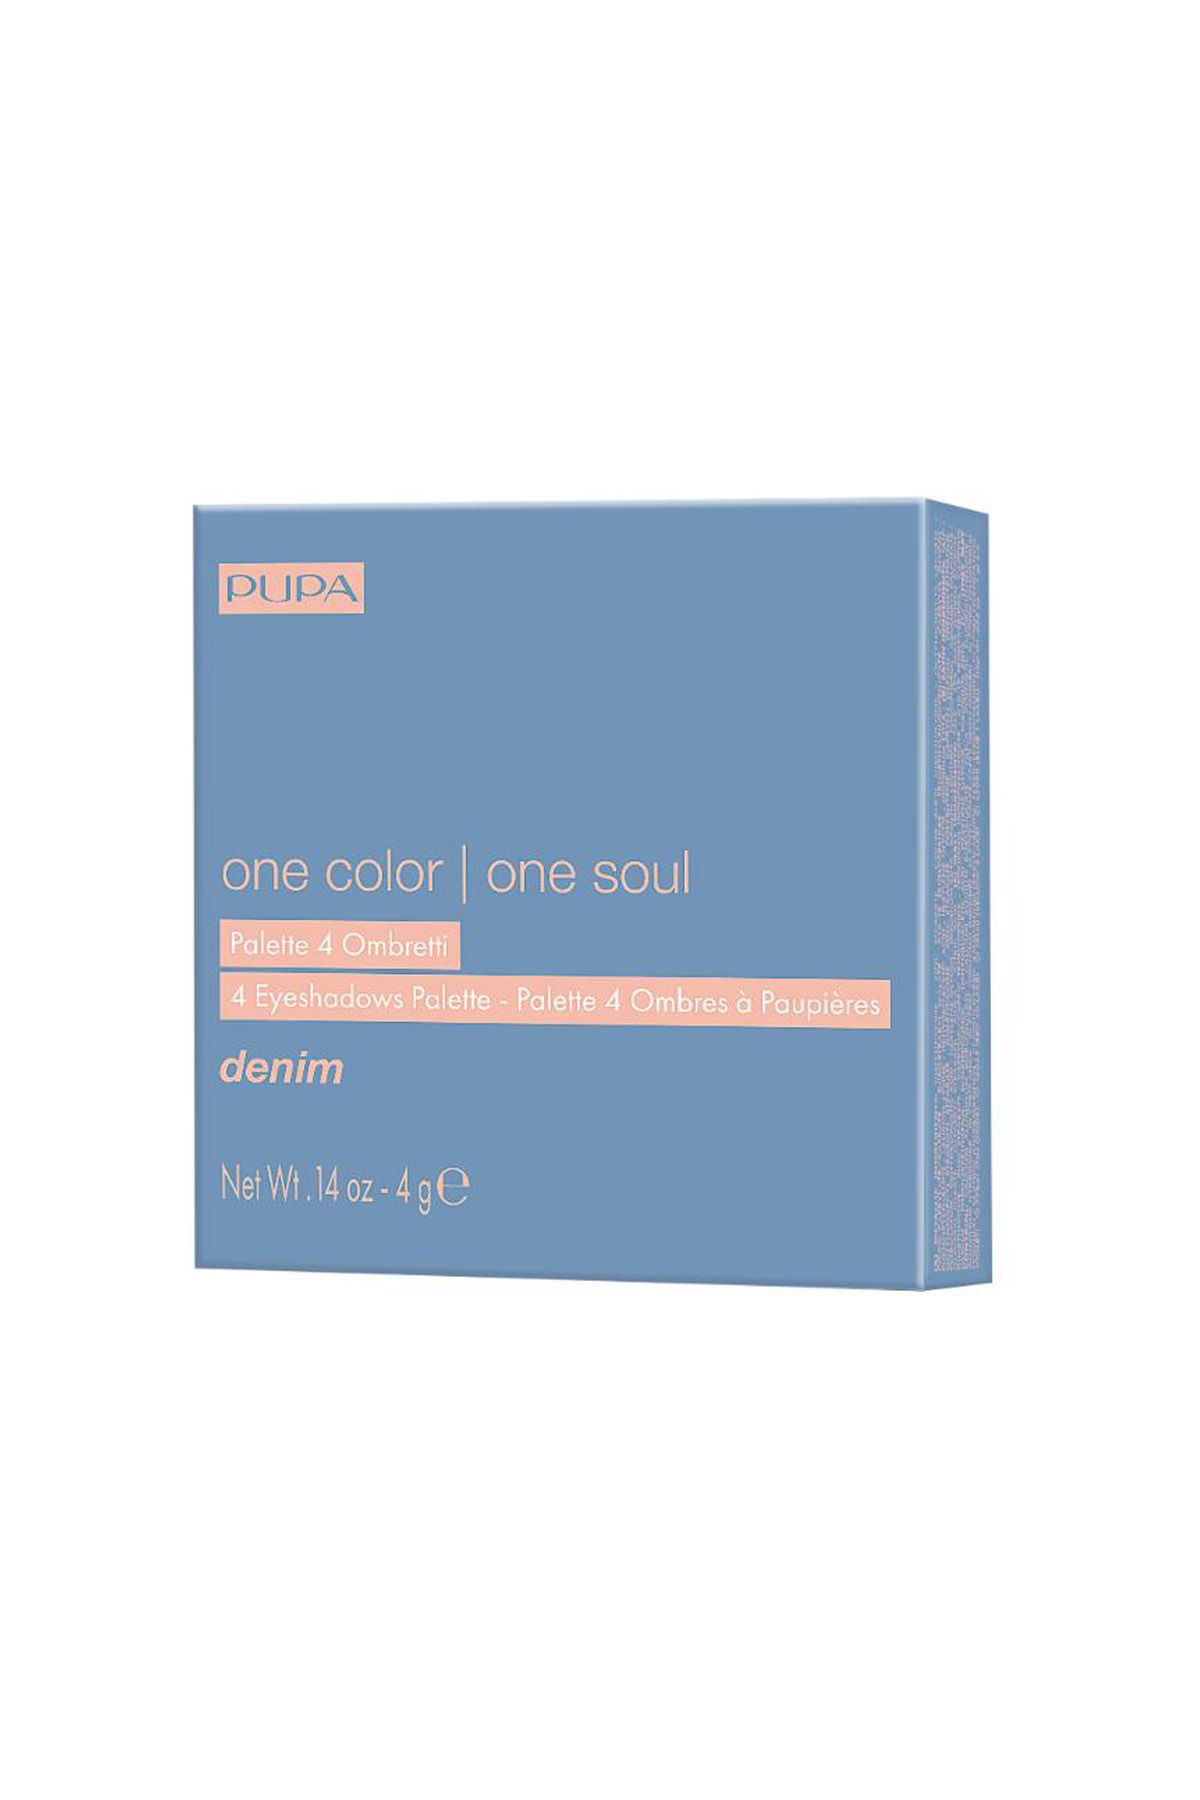 Pupa One Color, One Soul 4 Eyeshadows Palette Denim 